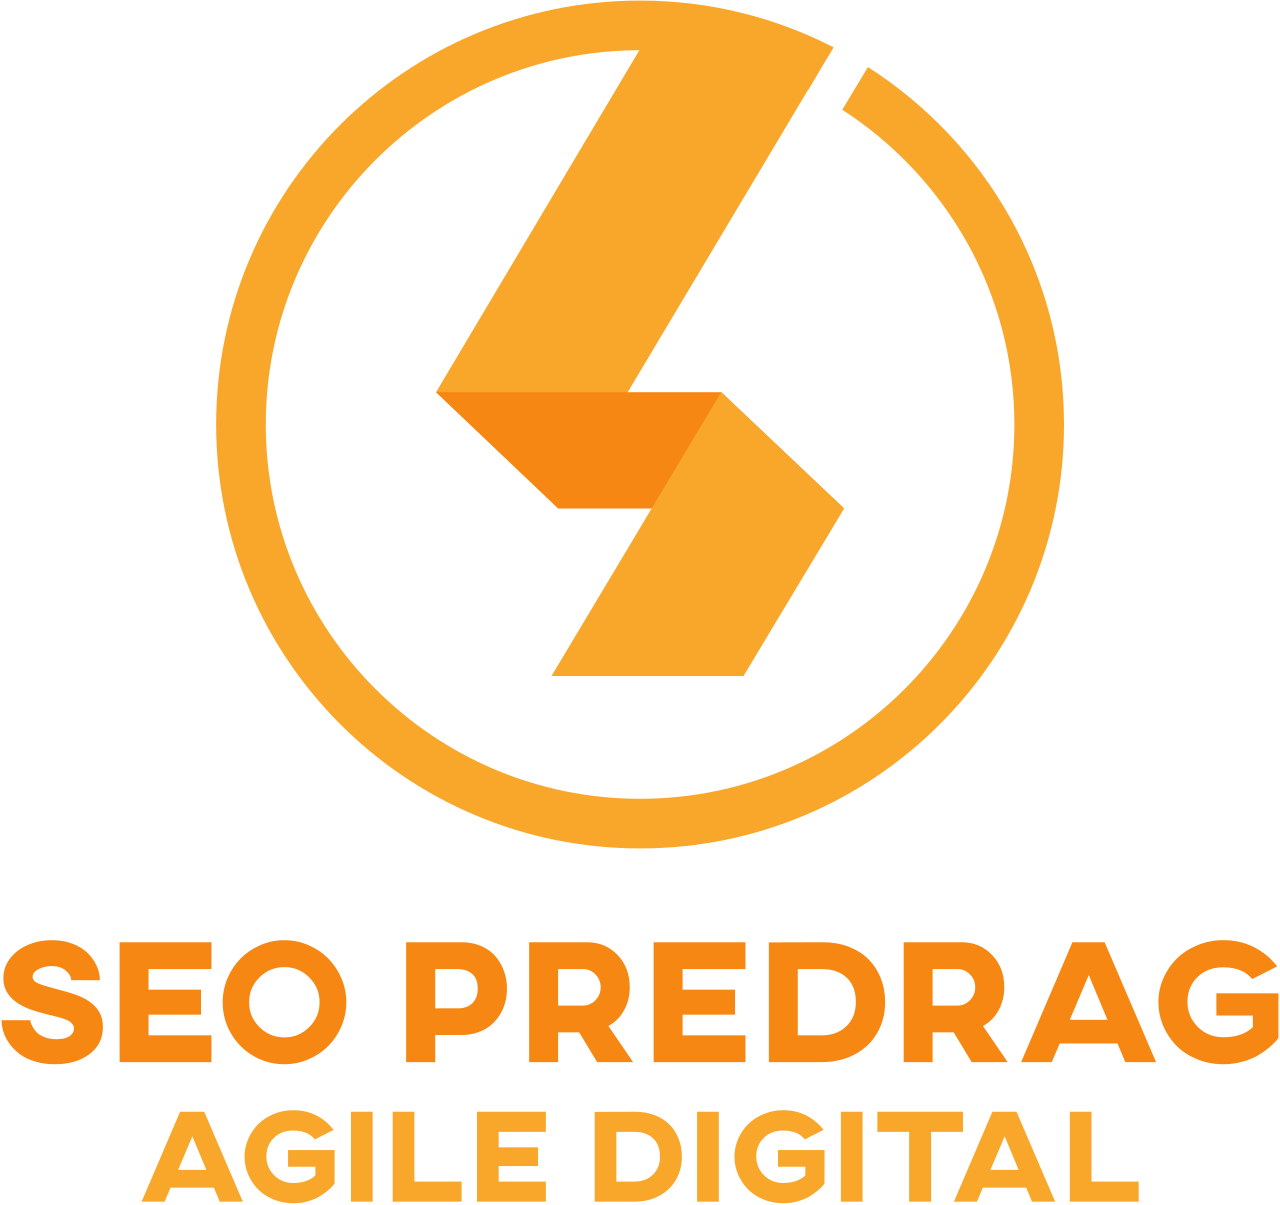 SEO PREDRAG's logo